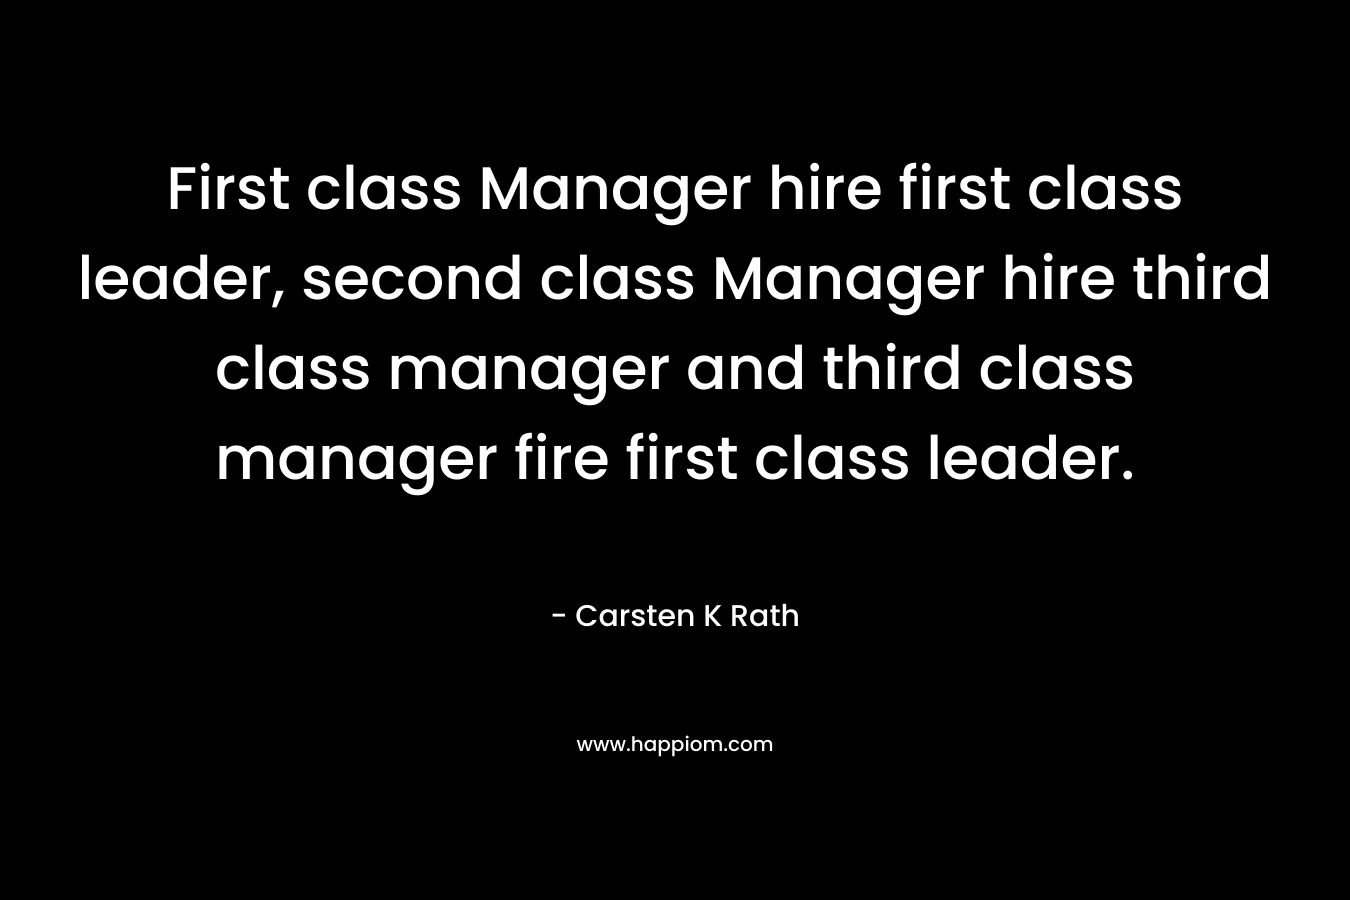 First class Manager hire first class leader, second class Manager hire third class manager and third class manager fire first class leader.